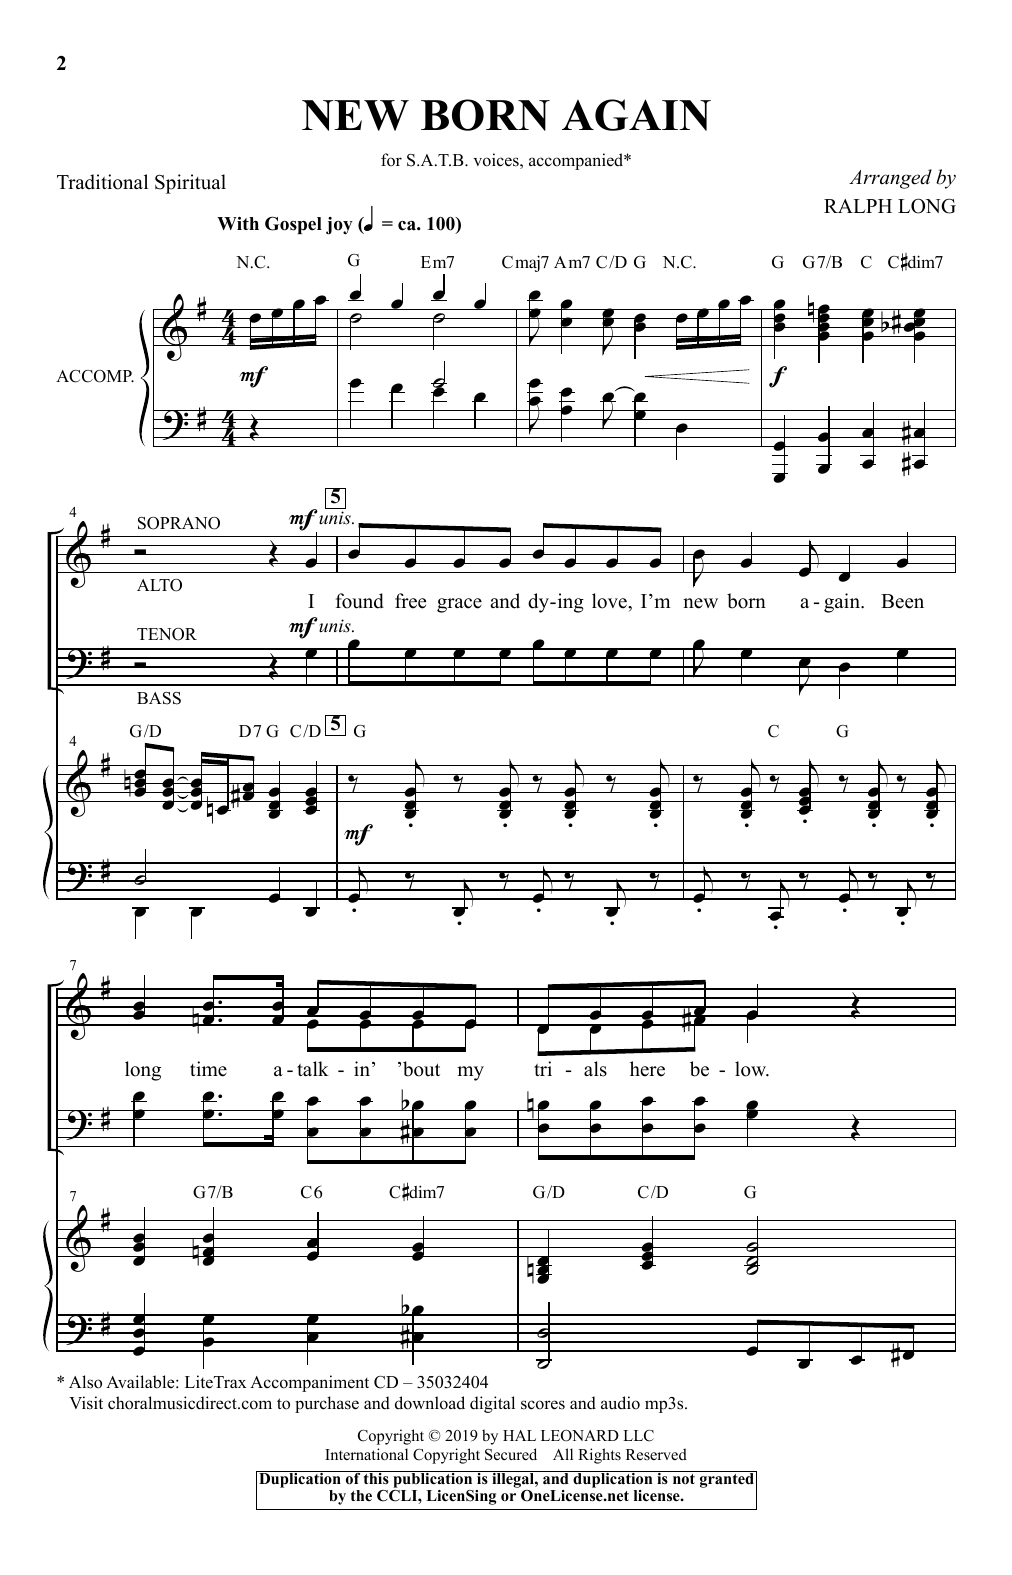 Traditional Spiritual New Born Again (arr. Ralph Long) Sheet Music Notes & Chords for SATB Choir - Download or Print PDF